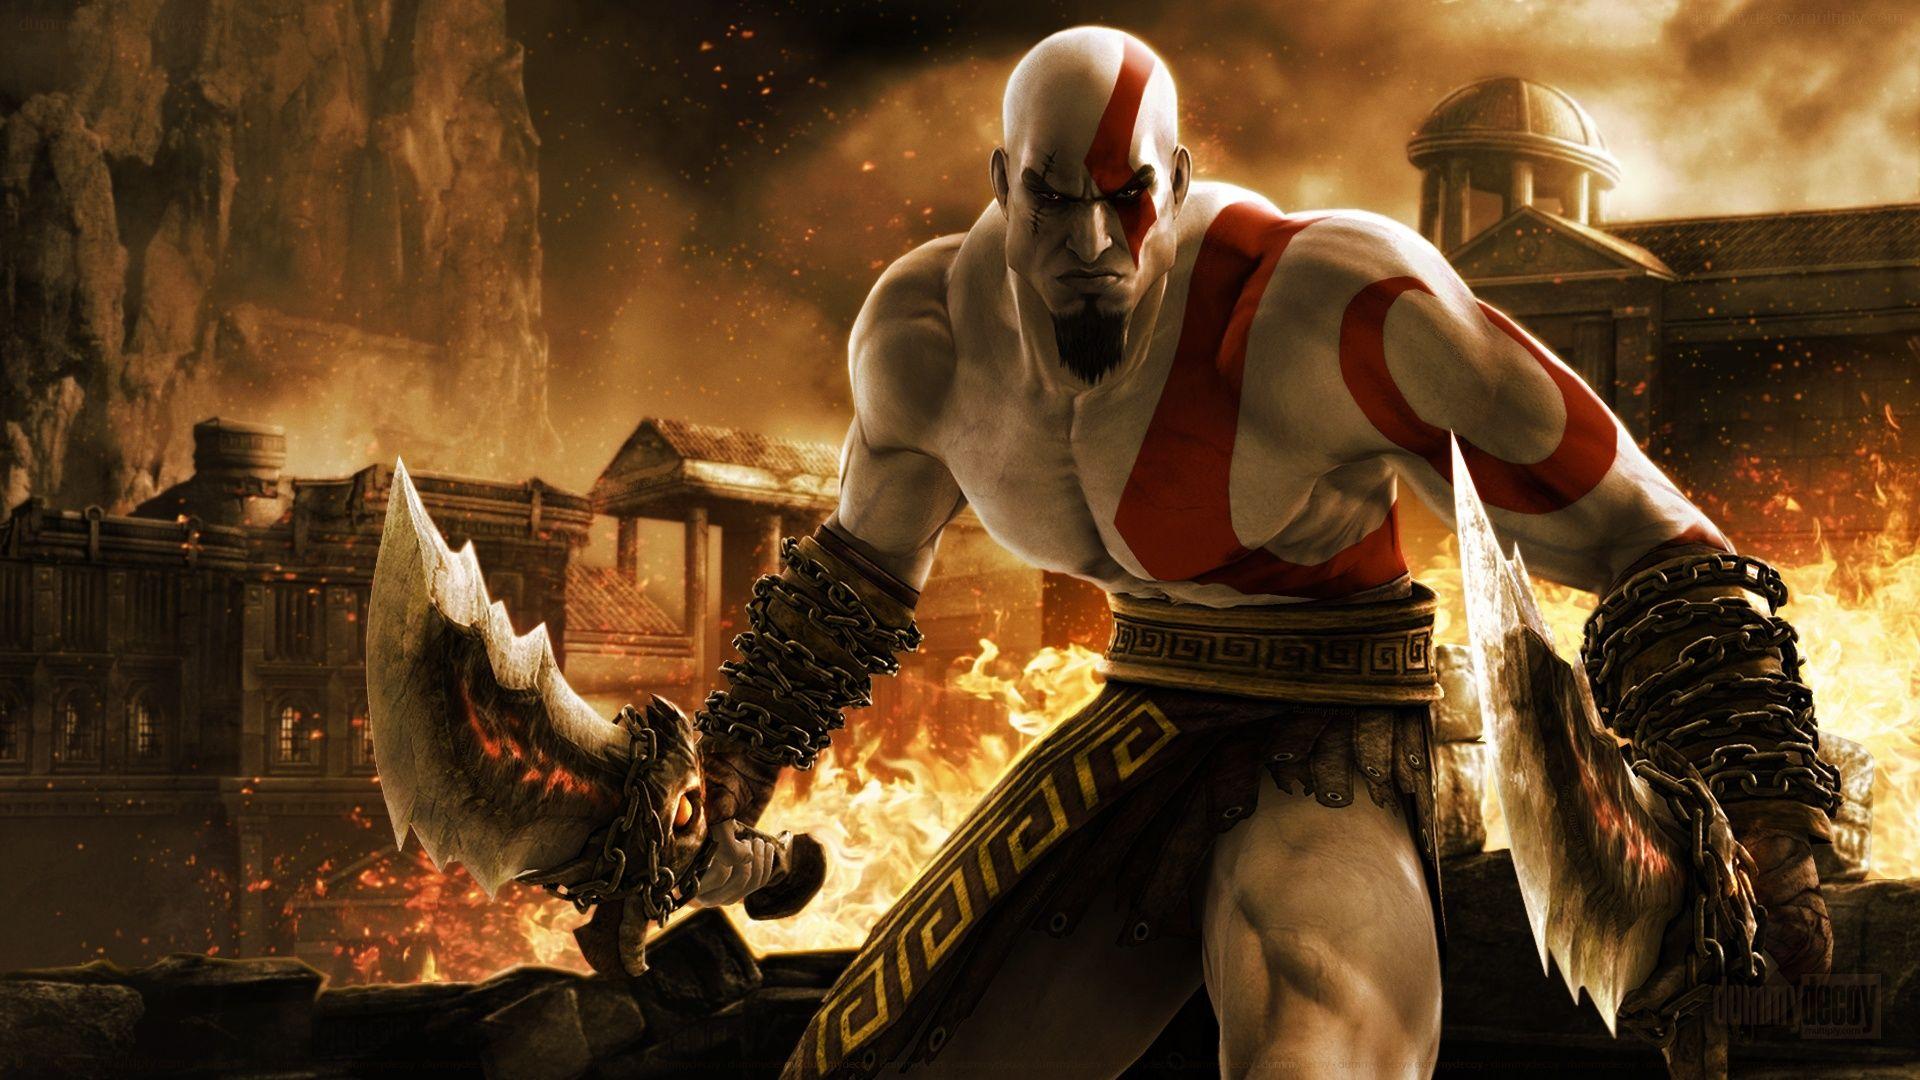 Kratos in God of War Wallpaper in jpg format for free download